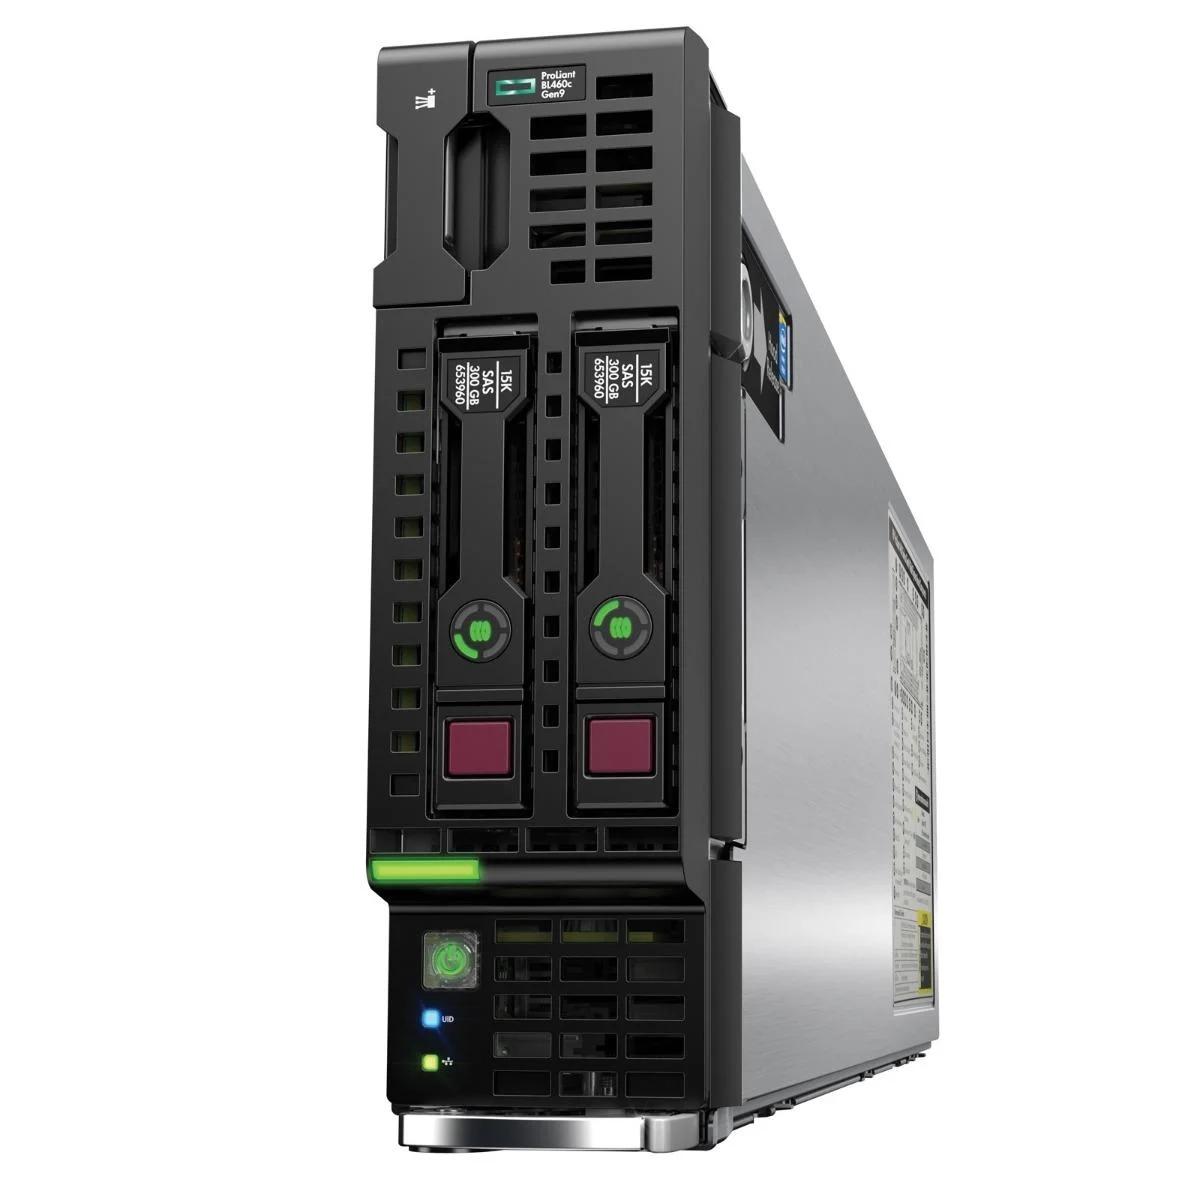 HPE BL460c G9 Blade Server 2x 18-Core Xeon 256GB RAM Configurable Node, P244br